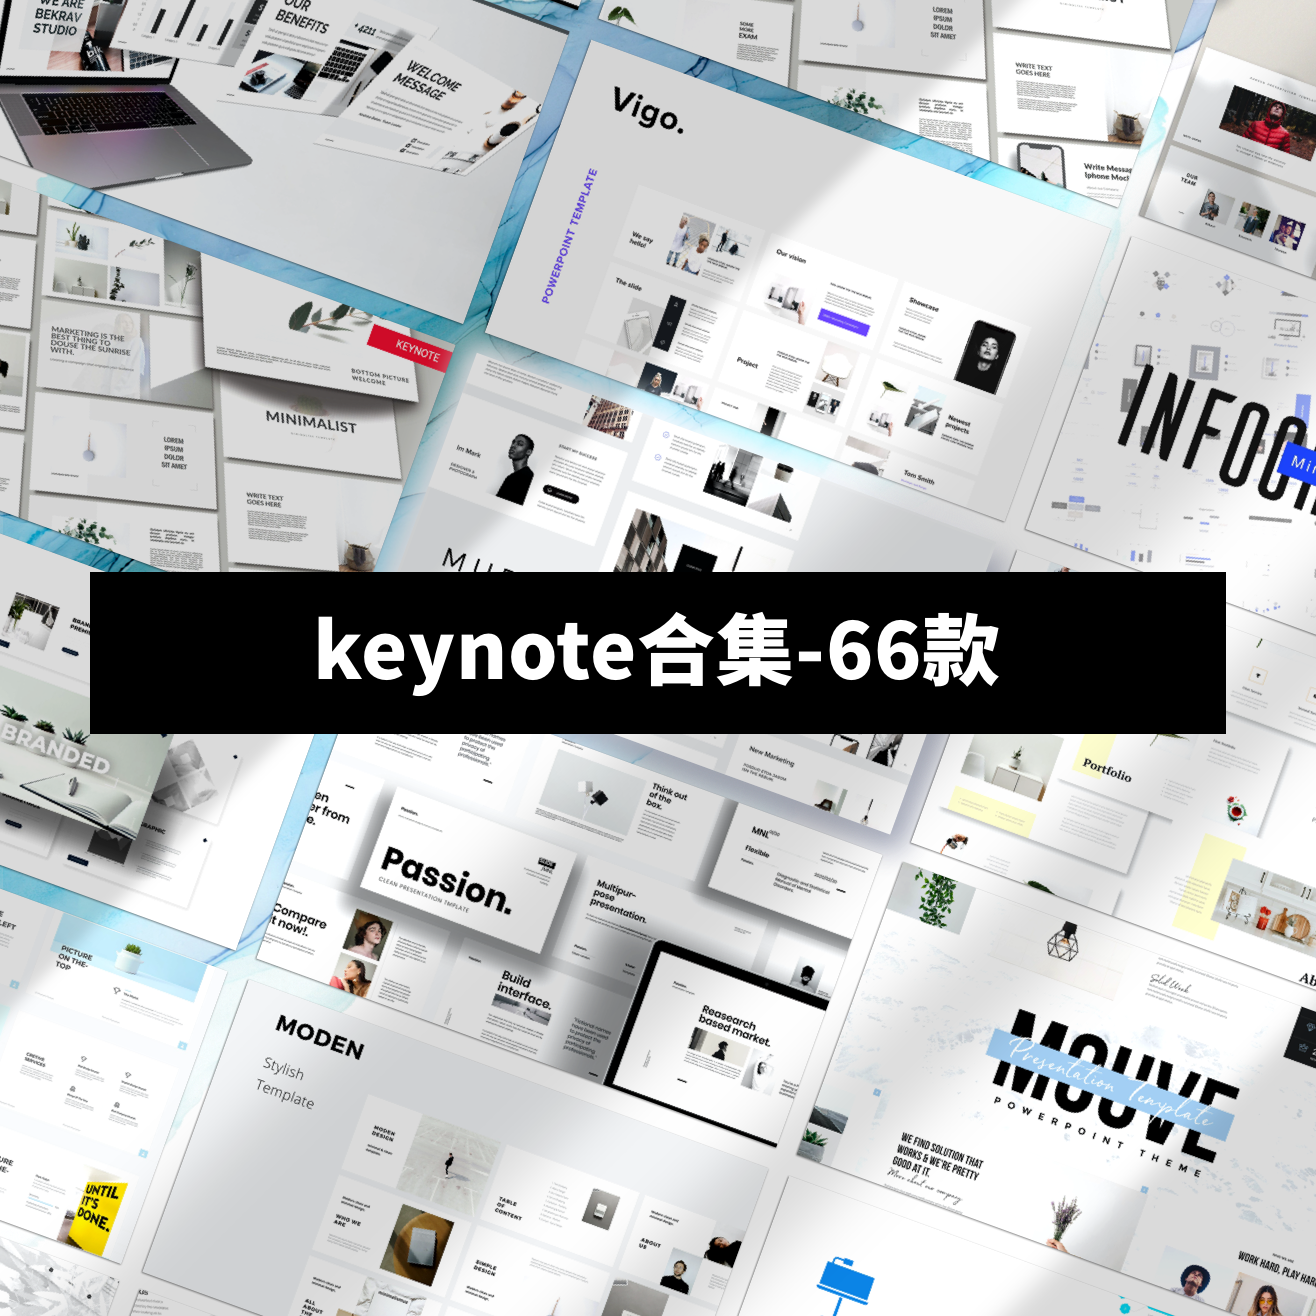 Keynote模板新品 Keynote模板价格 Keynote模板包邮 品牌 淘宝海外